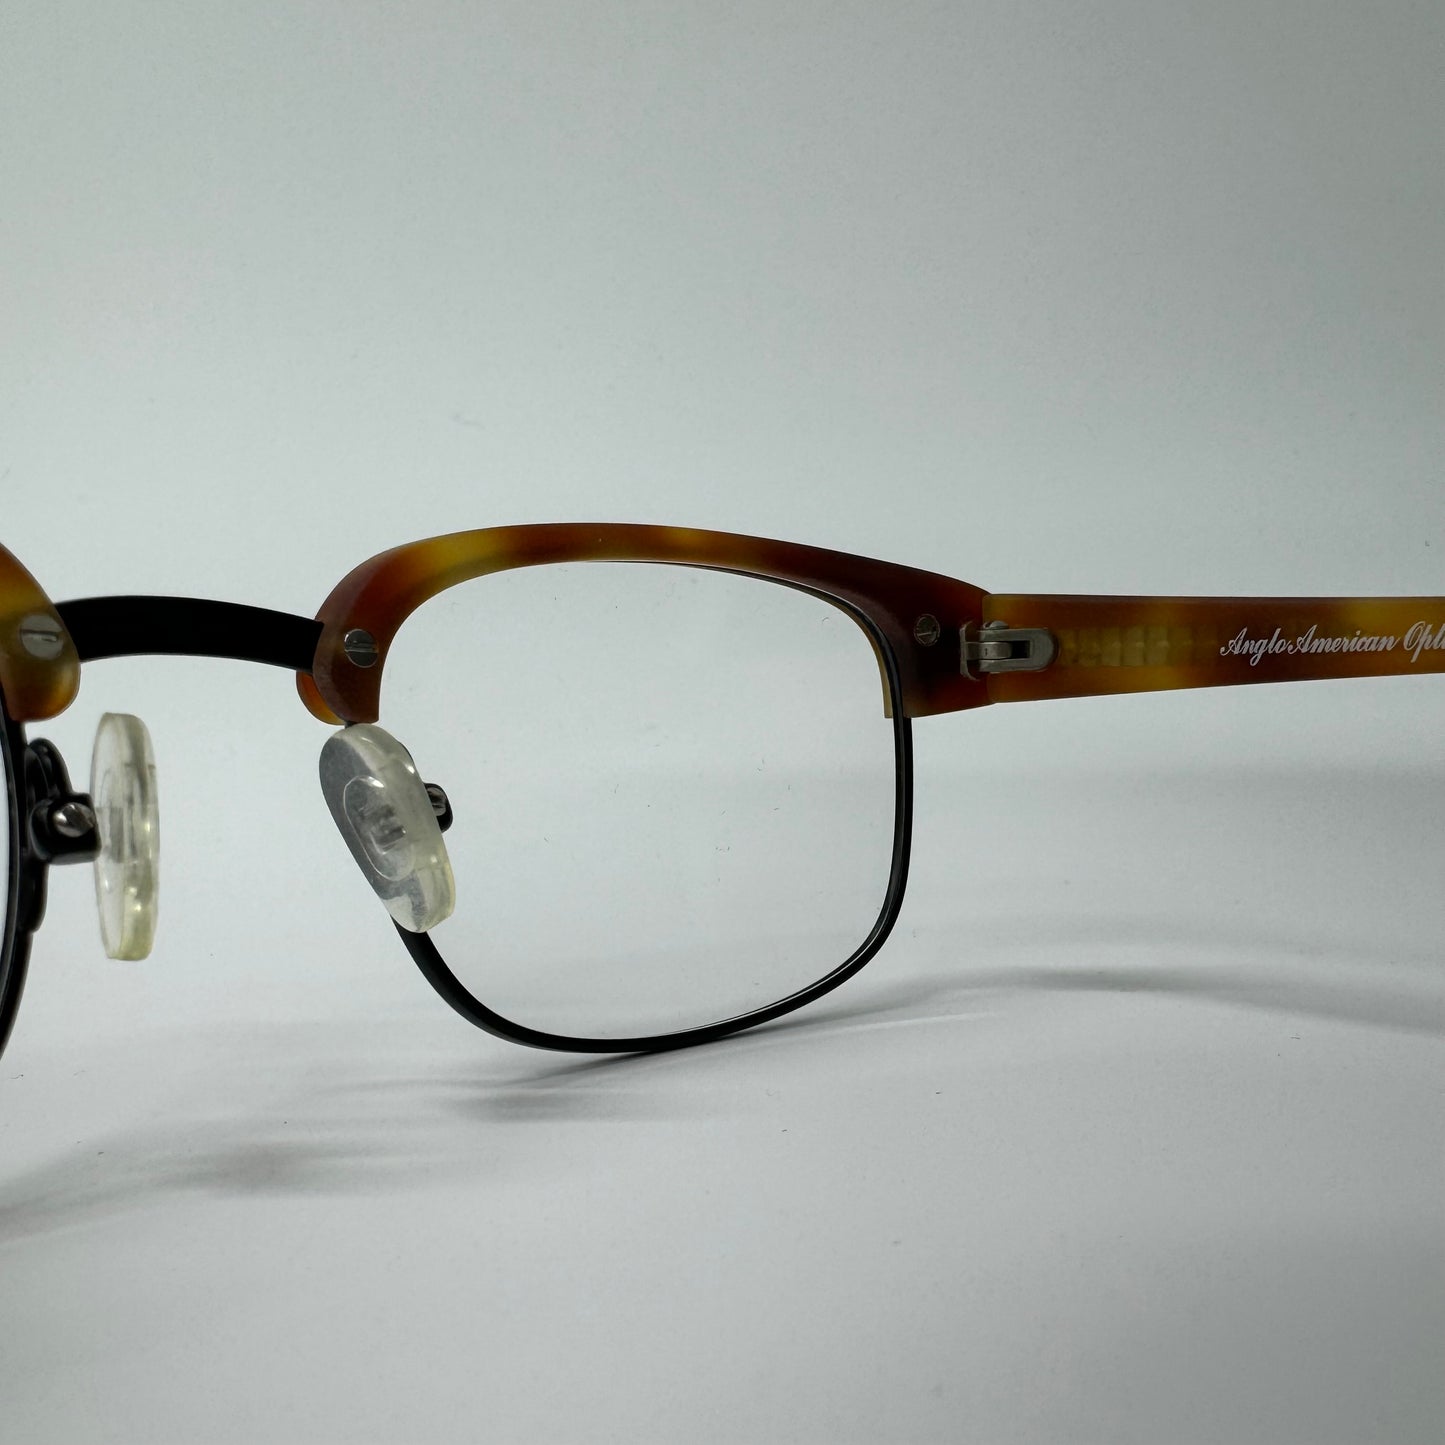 Anglo American Sentinel Glasses - DBYE